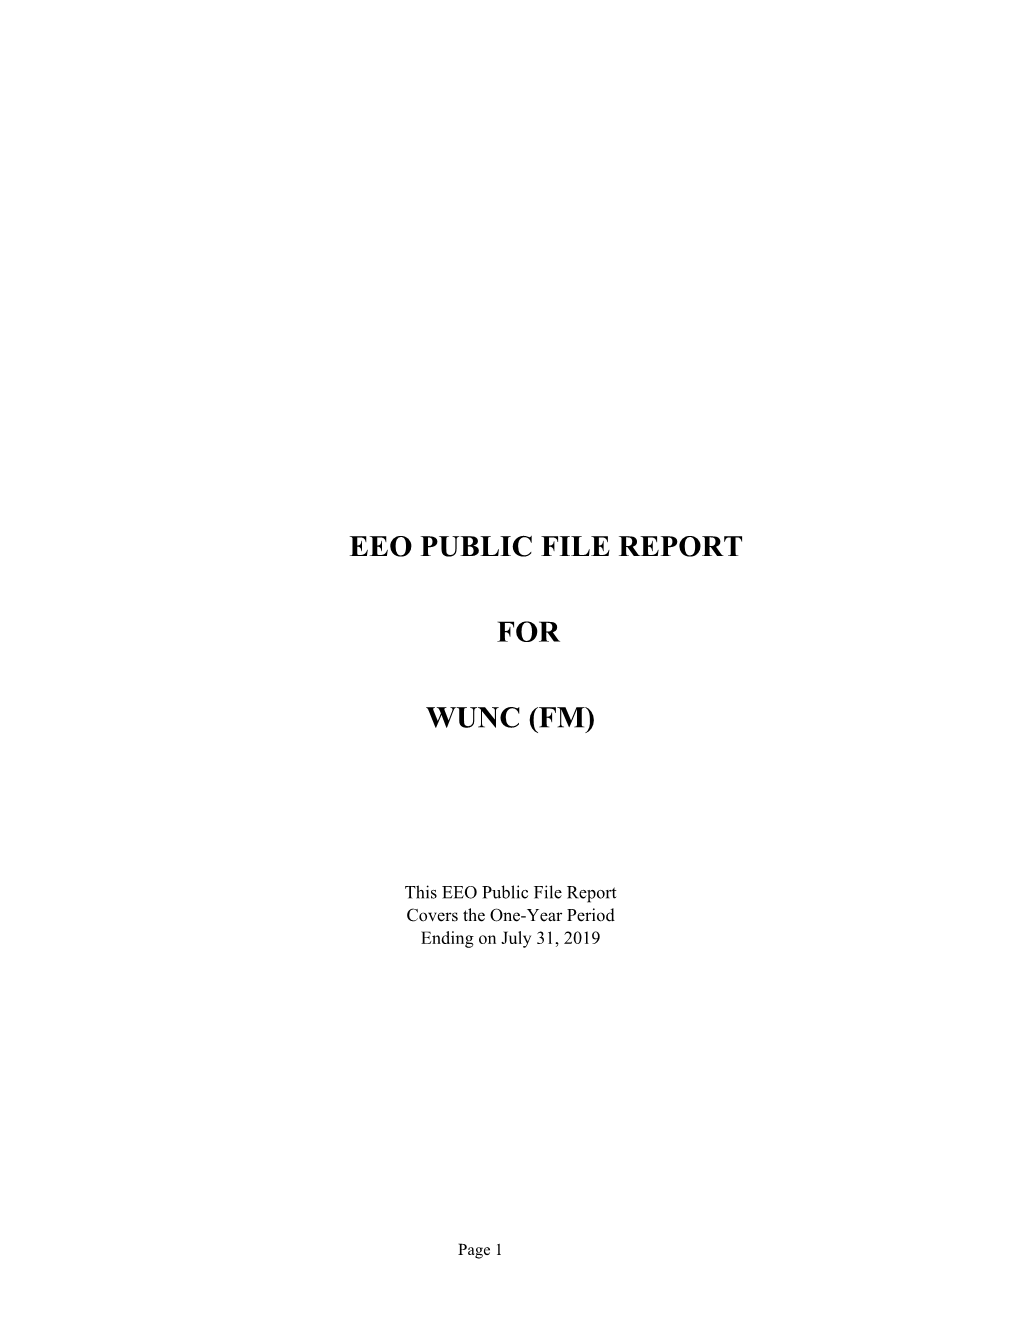 Eeo Public File Report for Wunc (Fm)